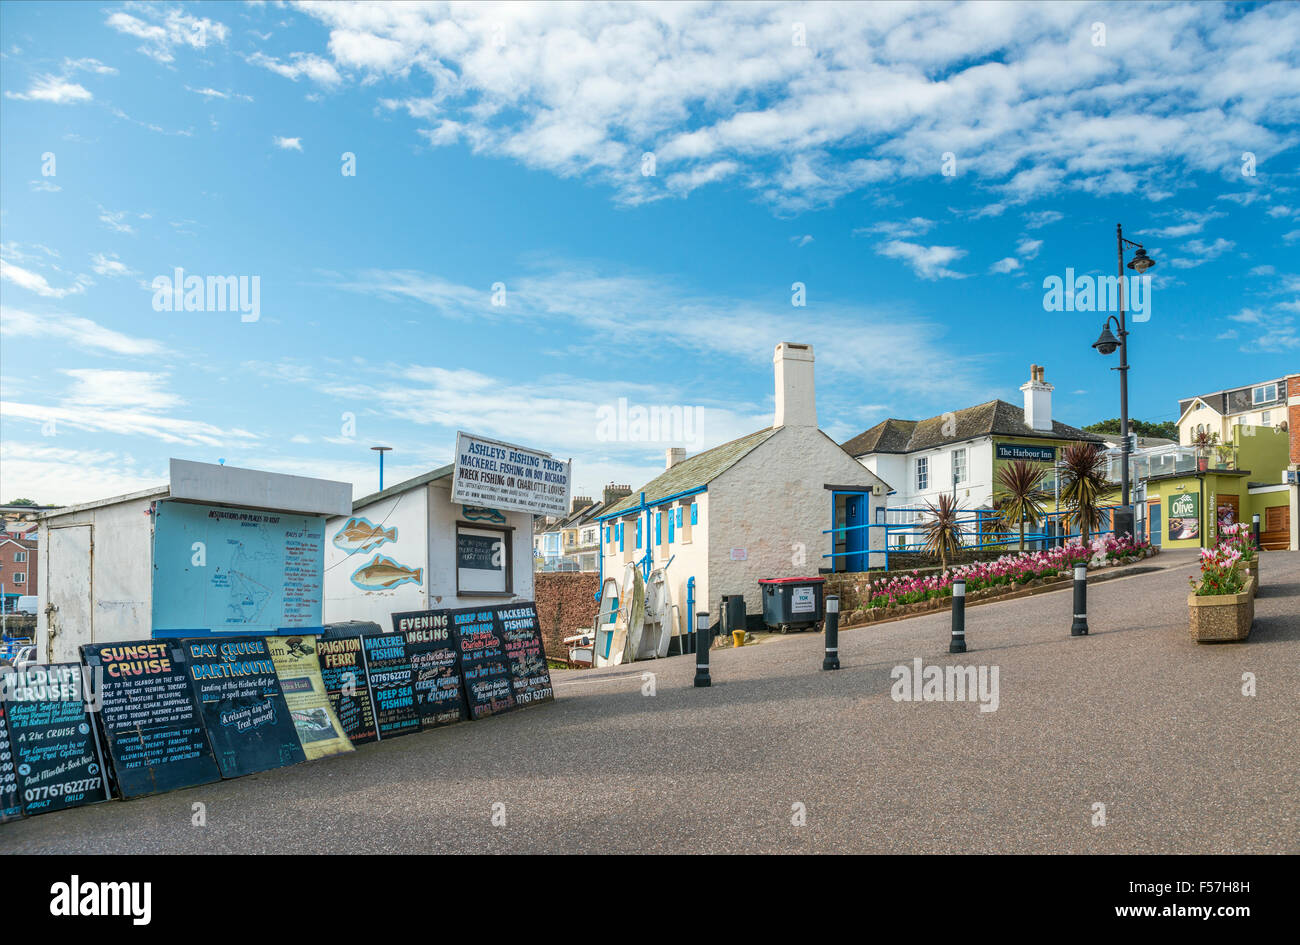 Paignton Seafront and Beach, Torbay, Devon, England, UK Stock Photo